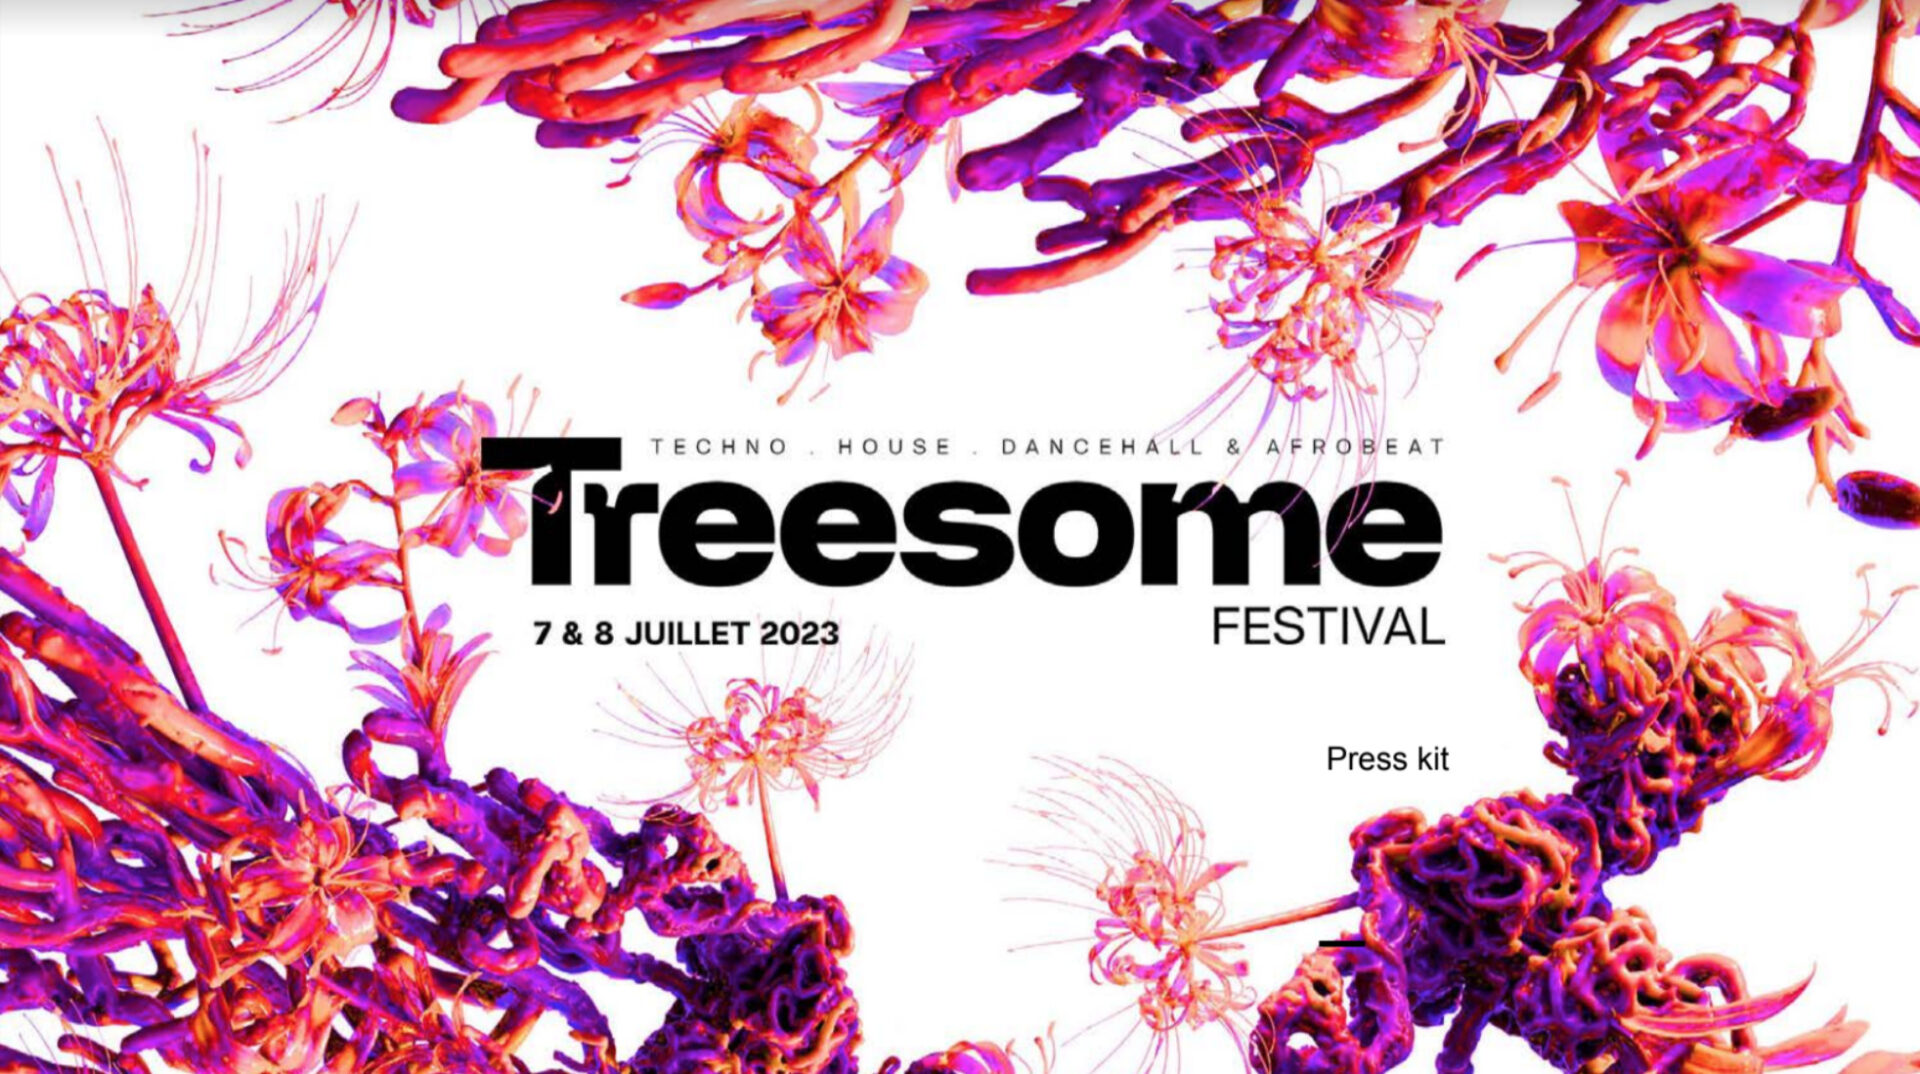 Treesome Festival